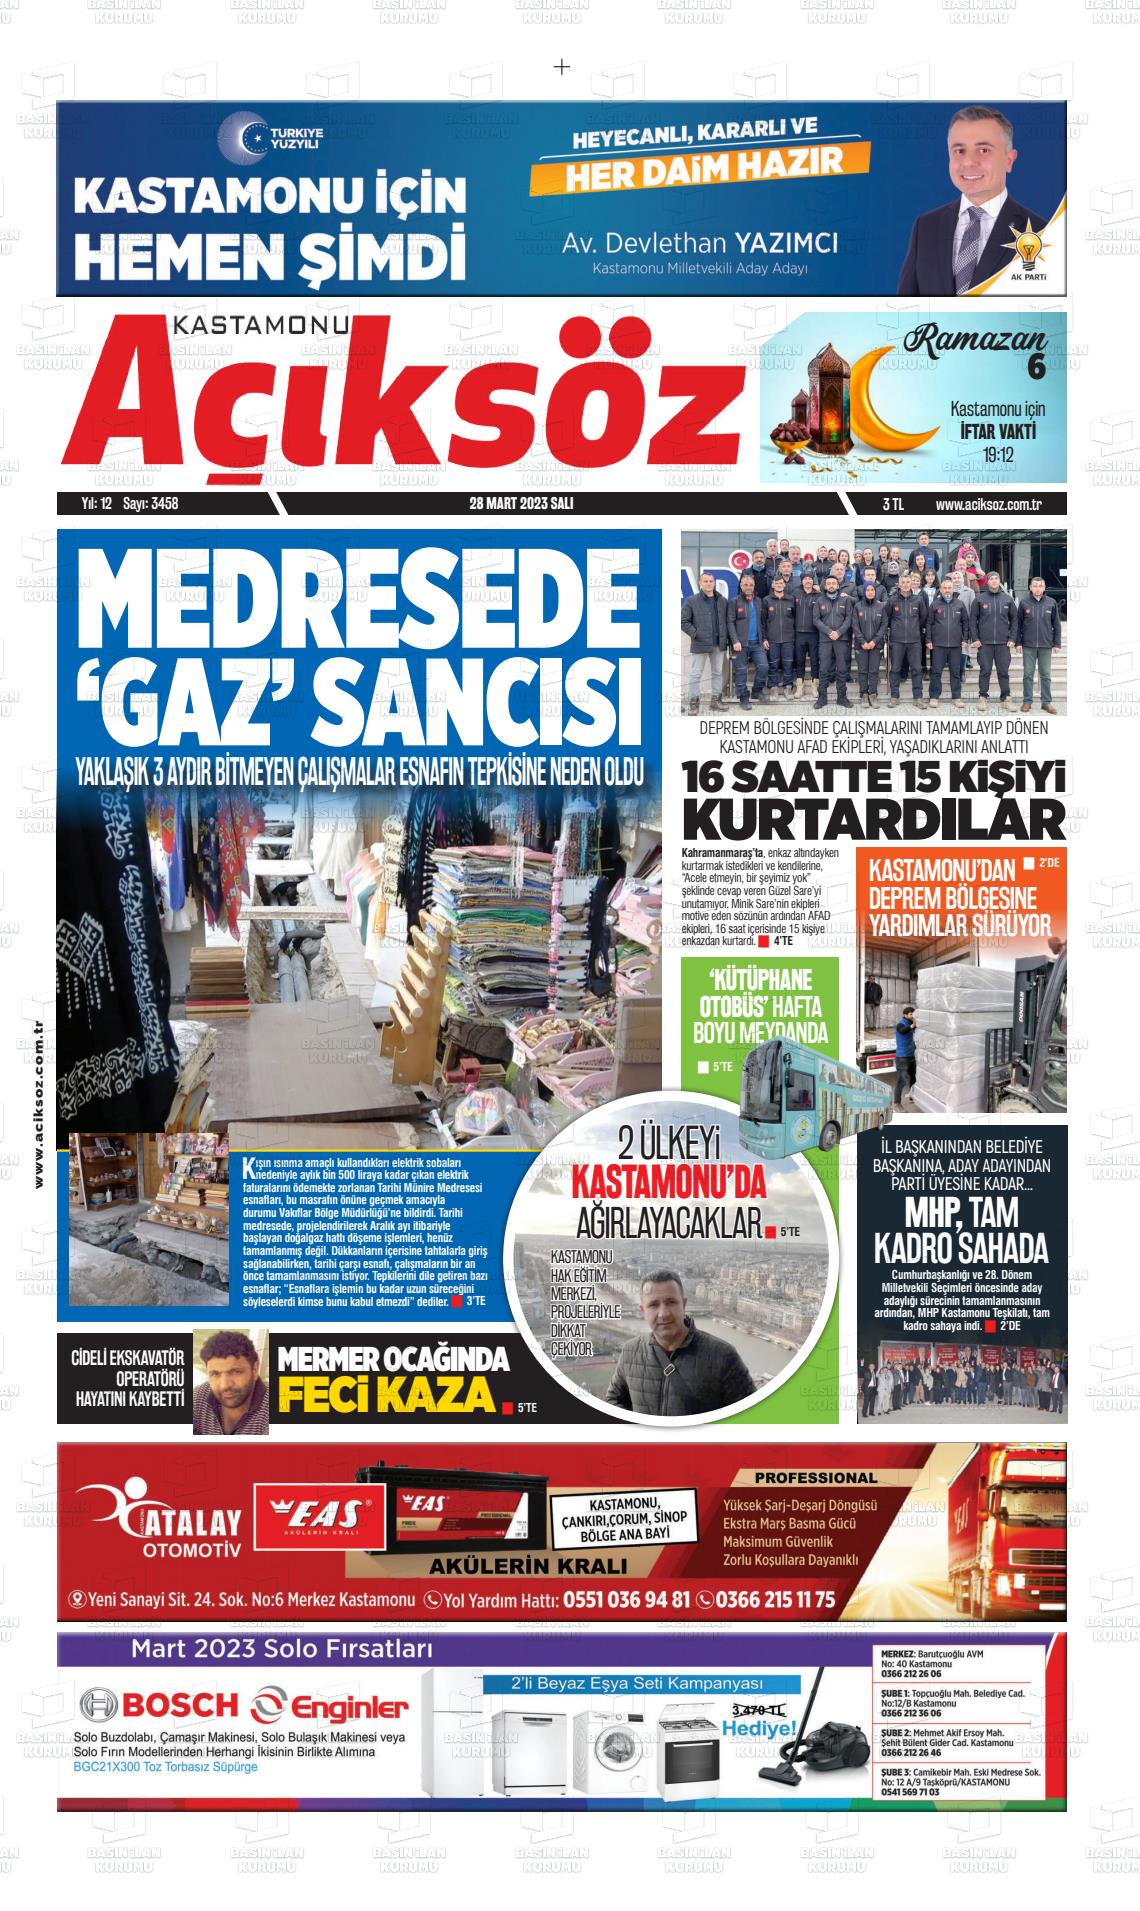 28 Mart 2023 KASTAMONU AÇIKSÖZ GAZETESİ Gazete Manşeti